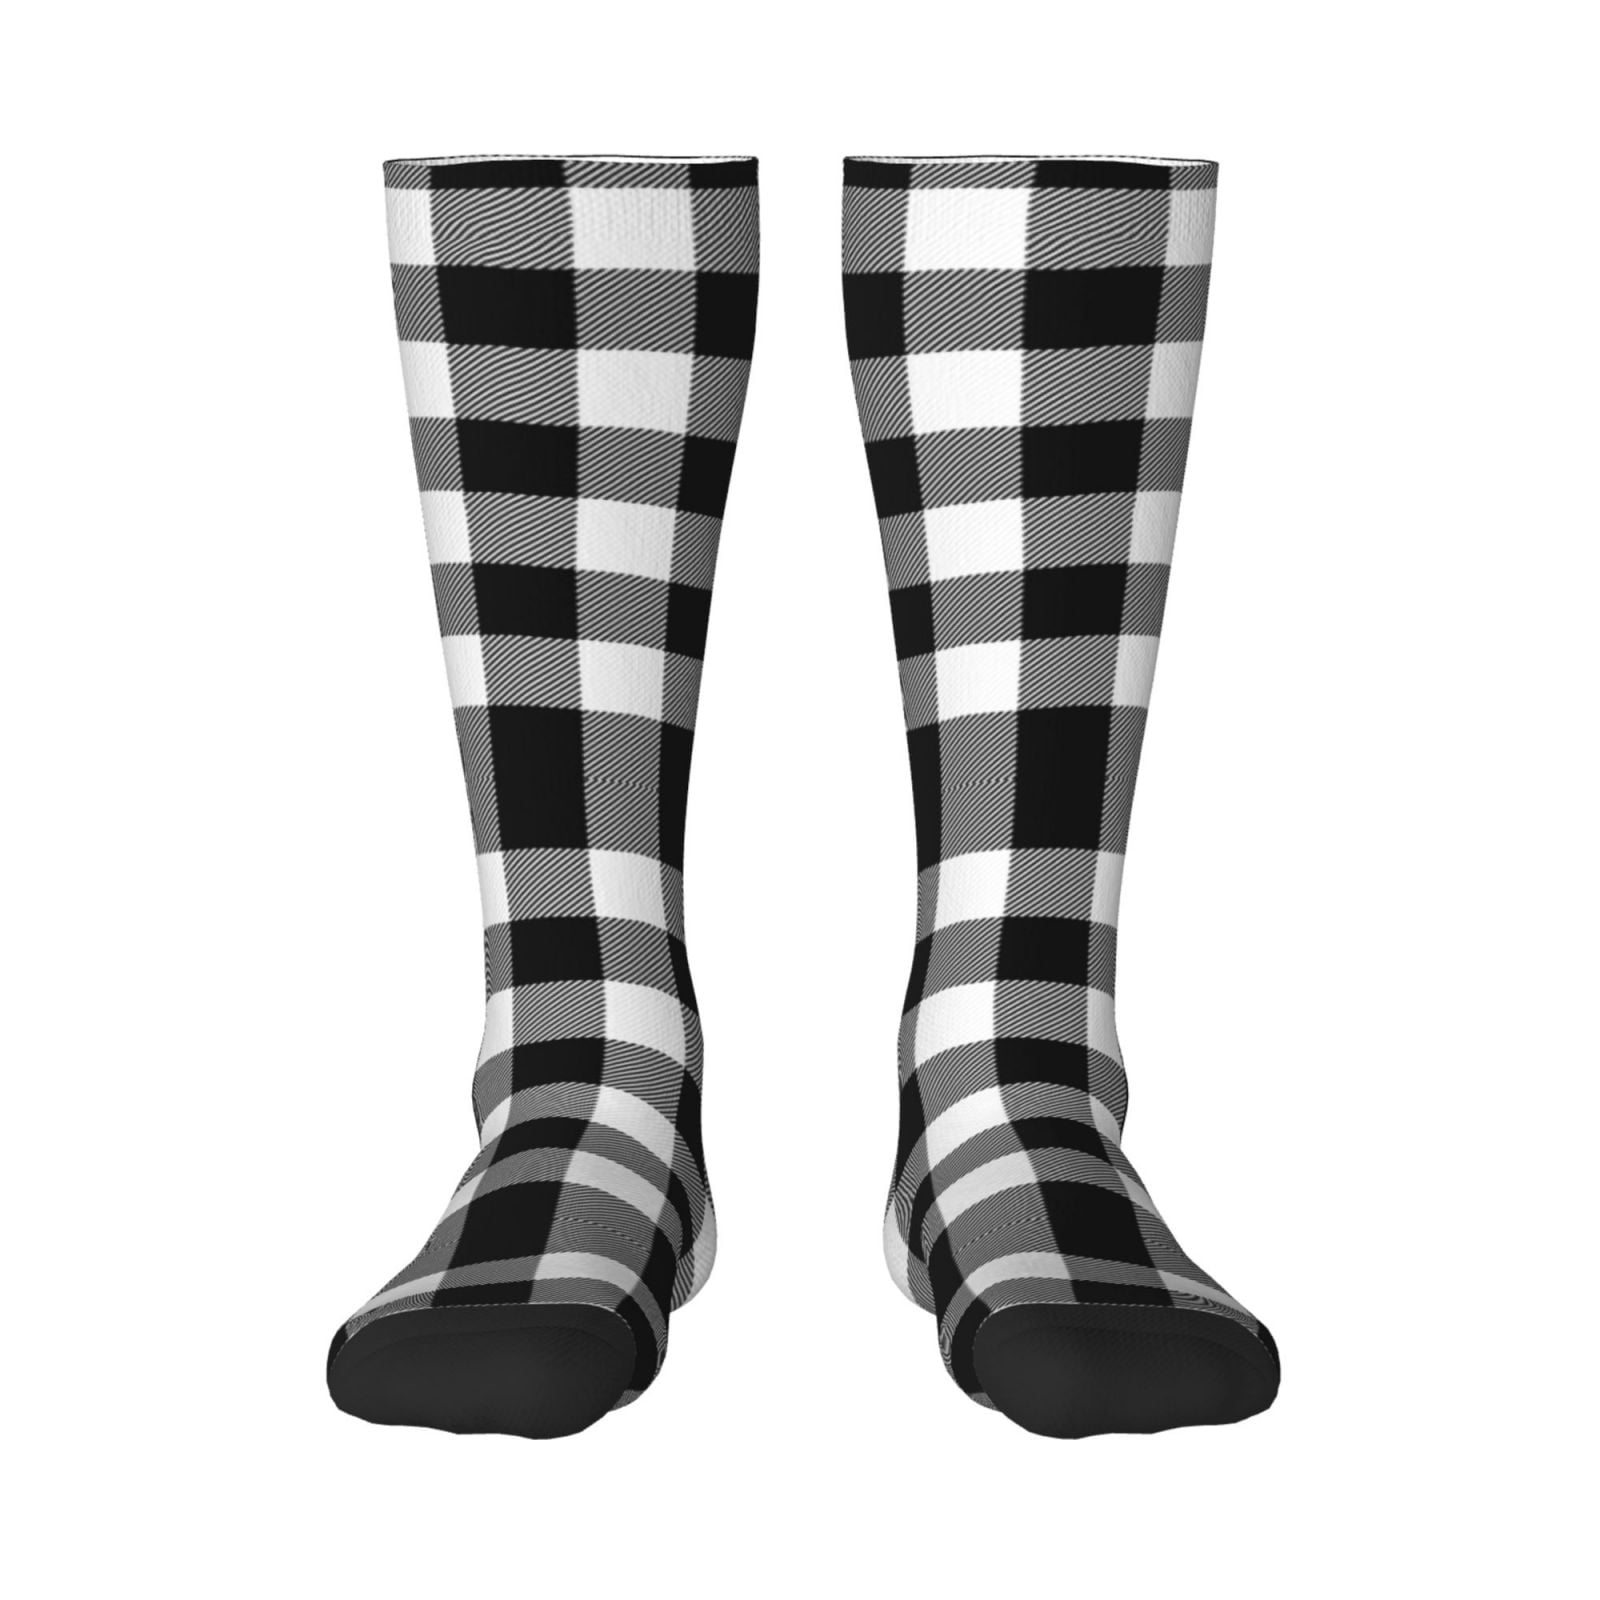 Daiia Sports Socks White And Black Plaid Printed Novelty Crew Socks for ...